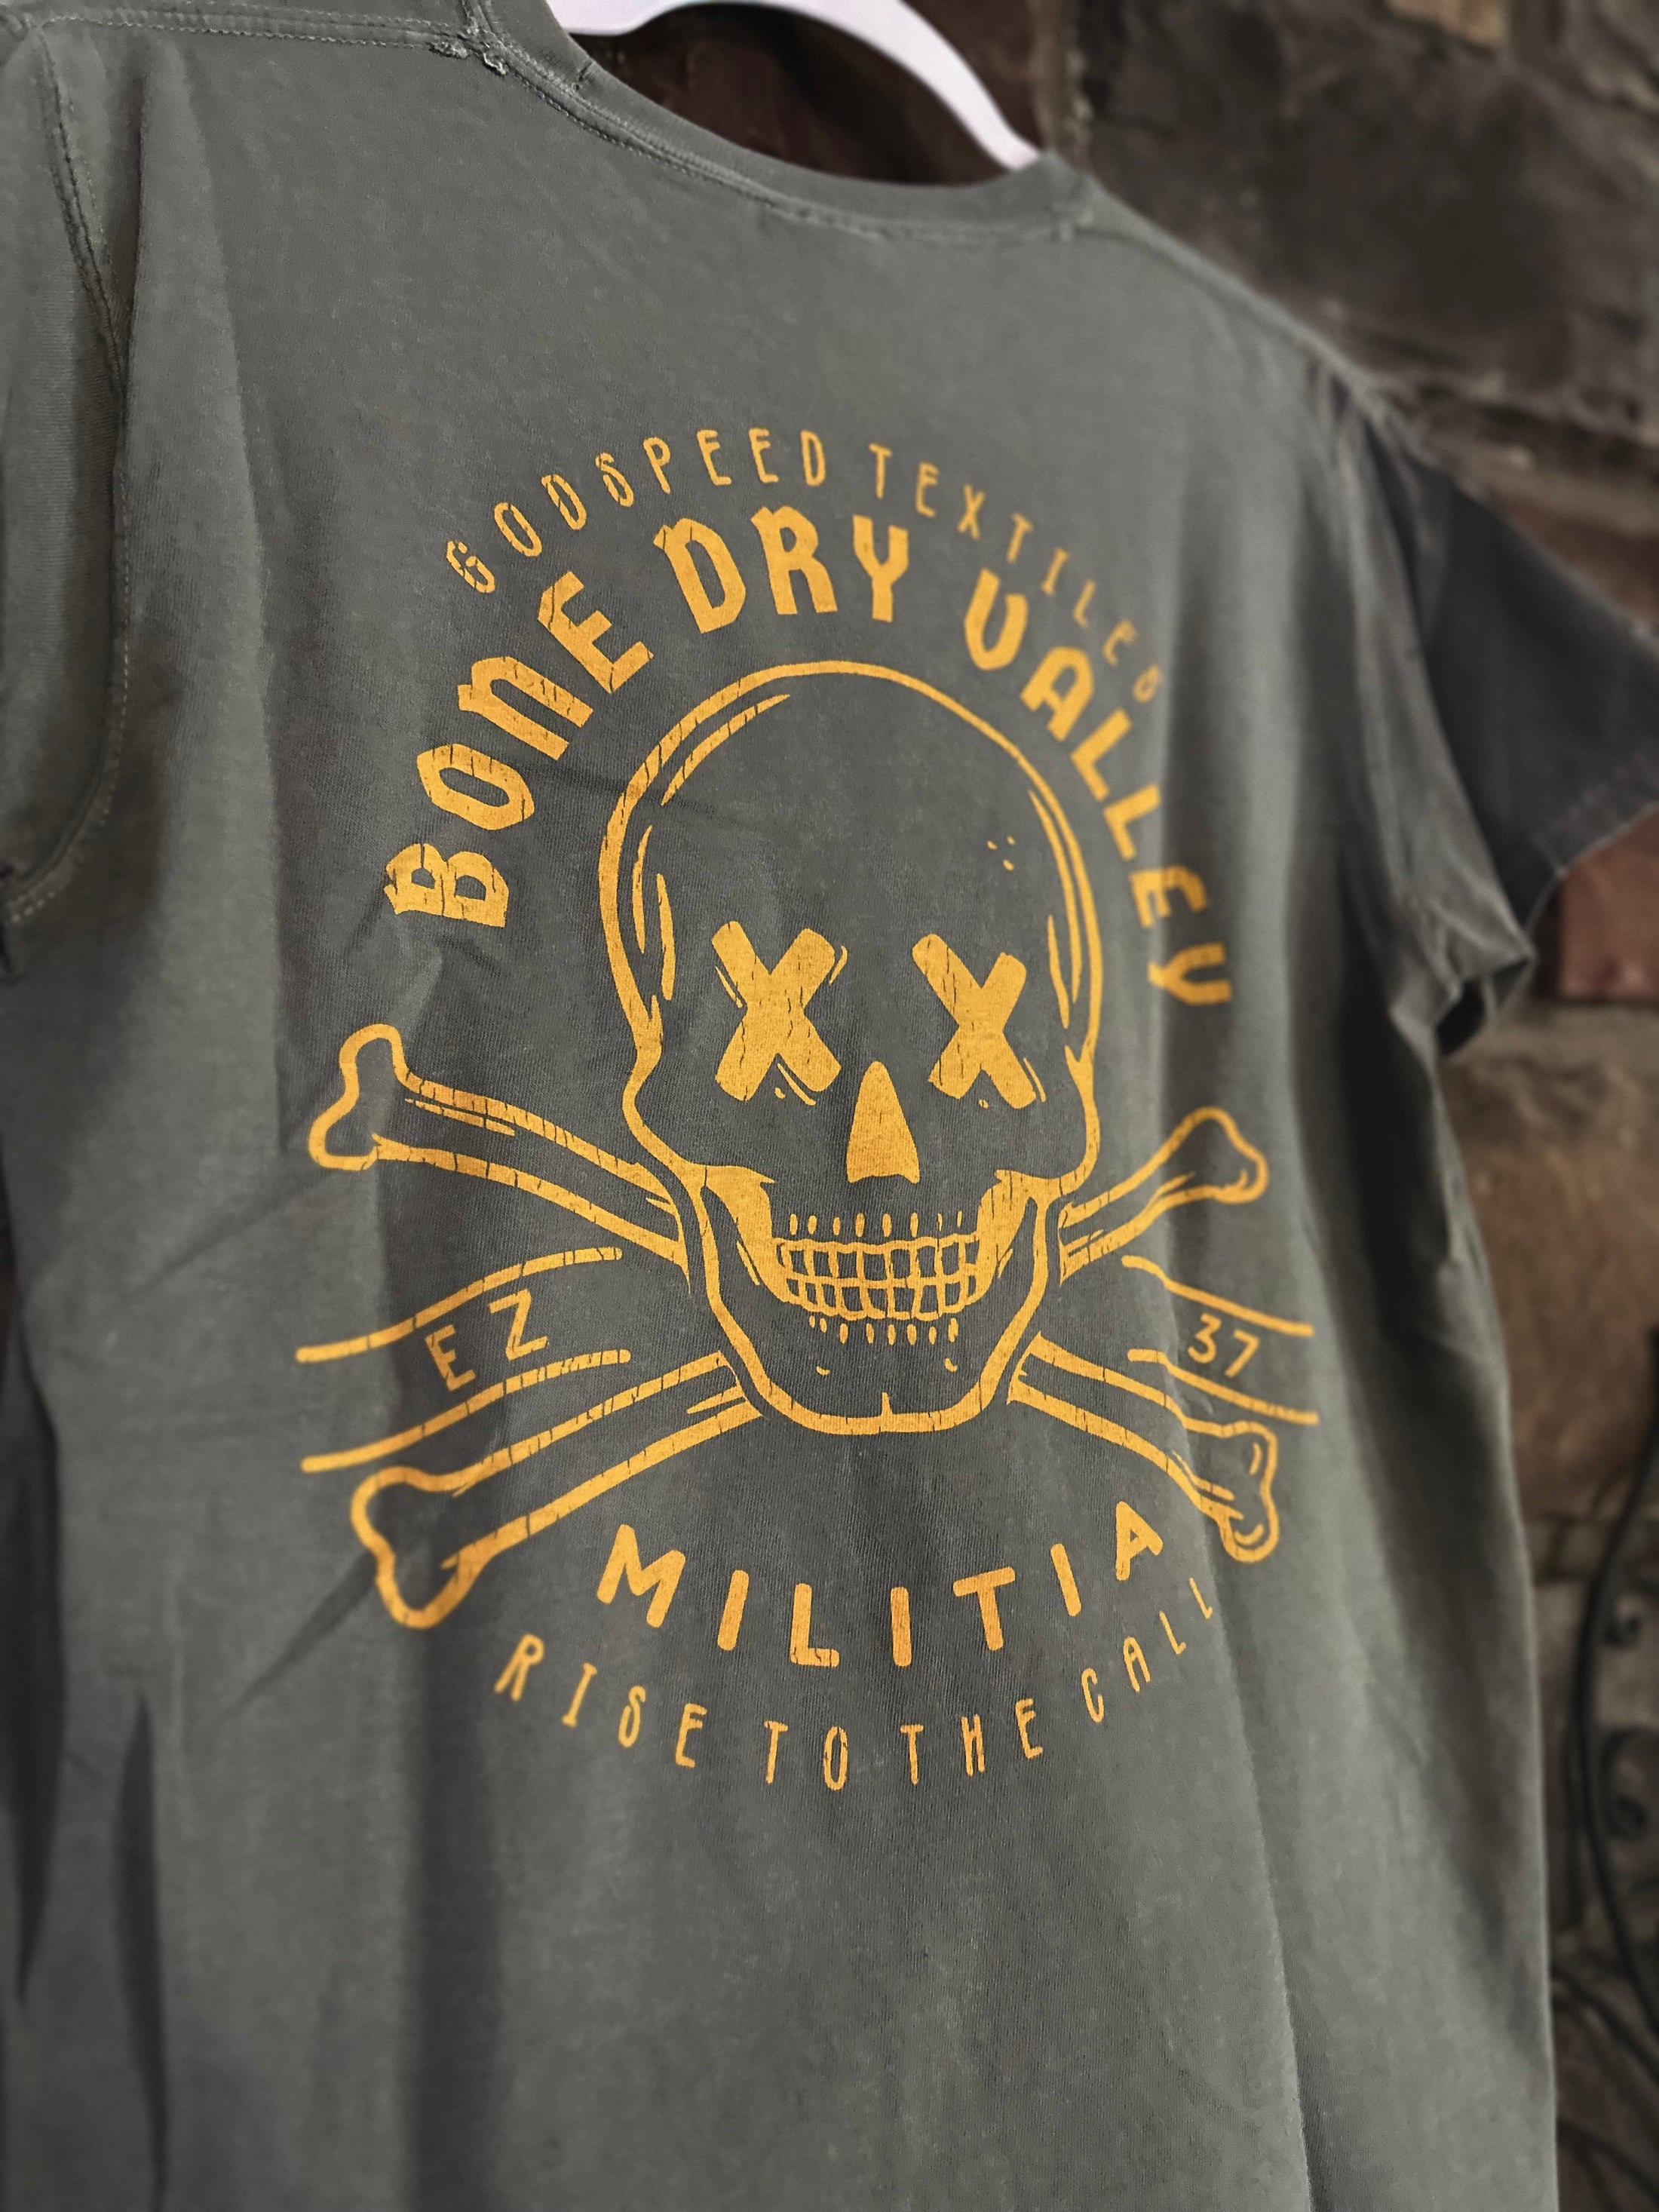 Godspeed Textiles "Bone Dry Valley" Unisex T-Shirt